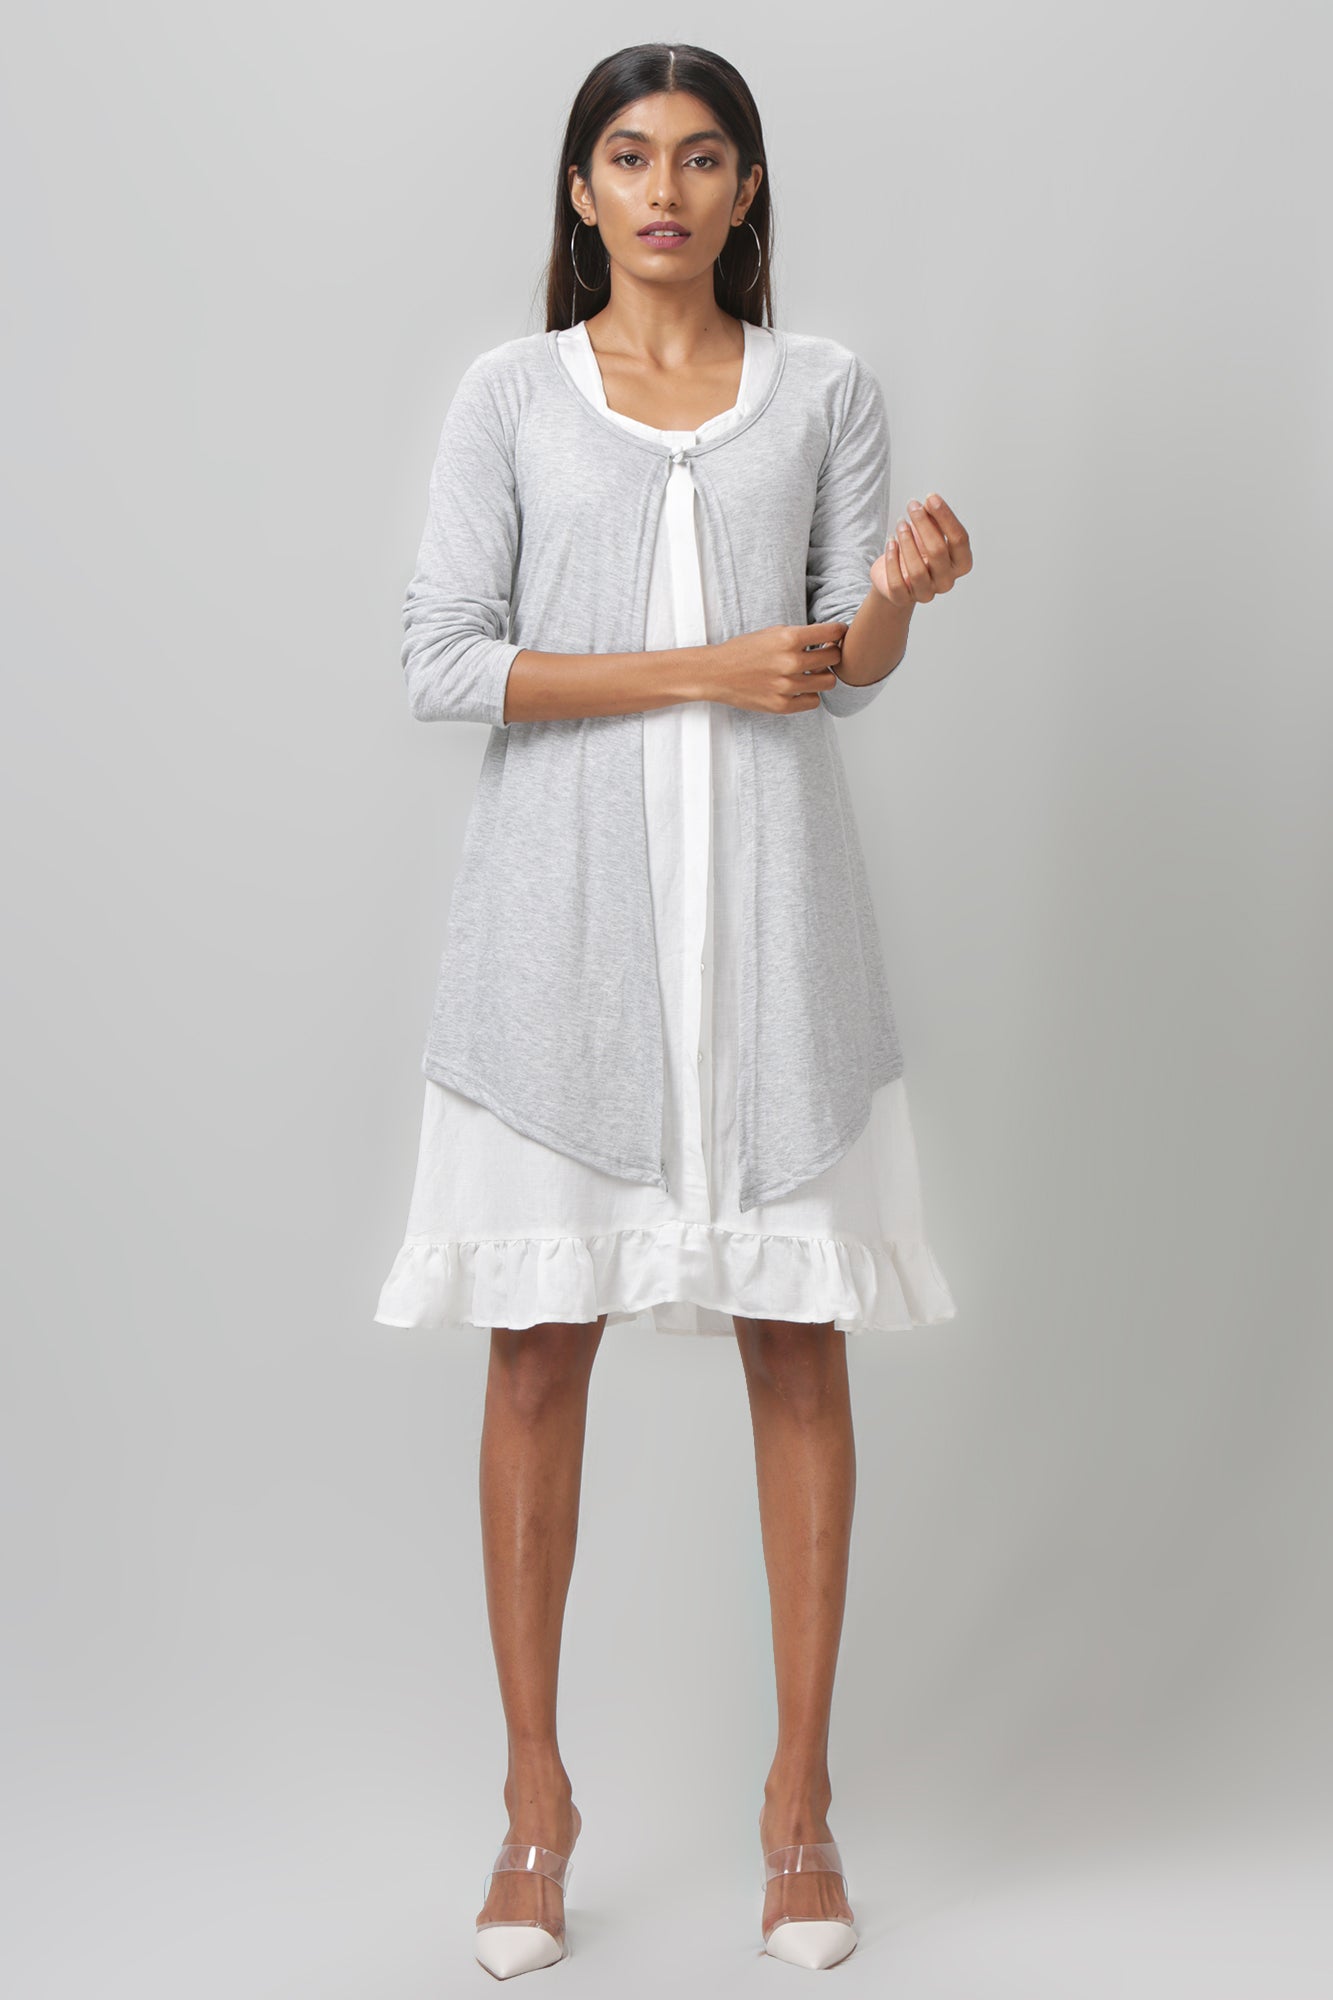 White dress with grey short shrug - WomanLikeU